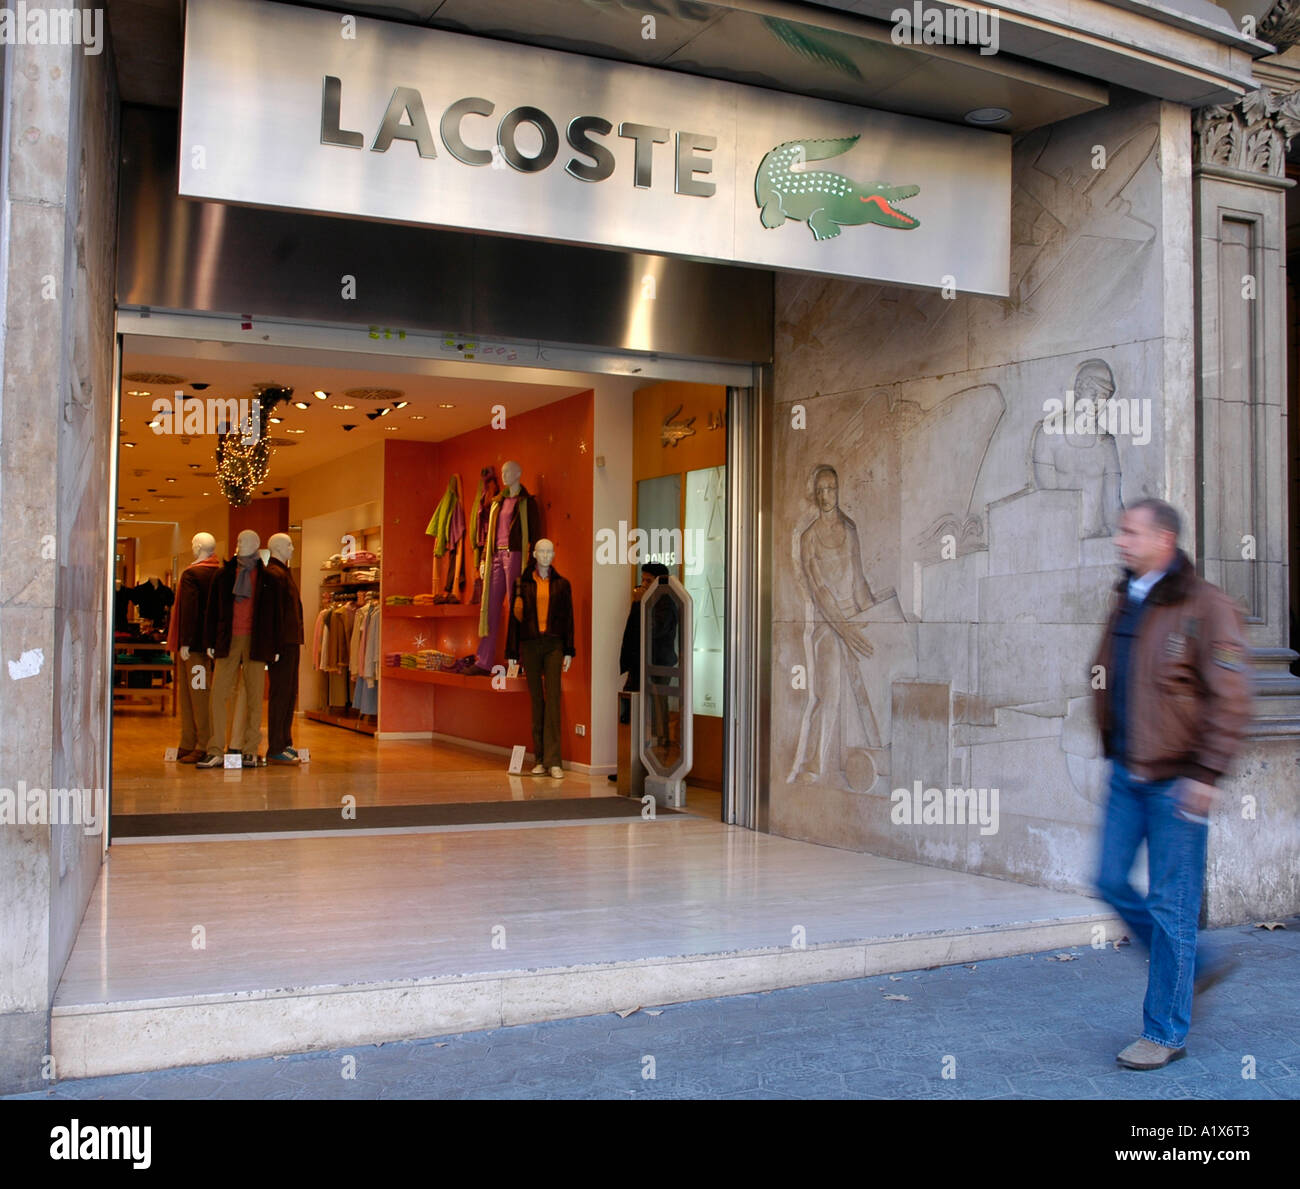 Lacoste Shop, Barcellona Foto stock - Alamy